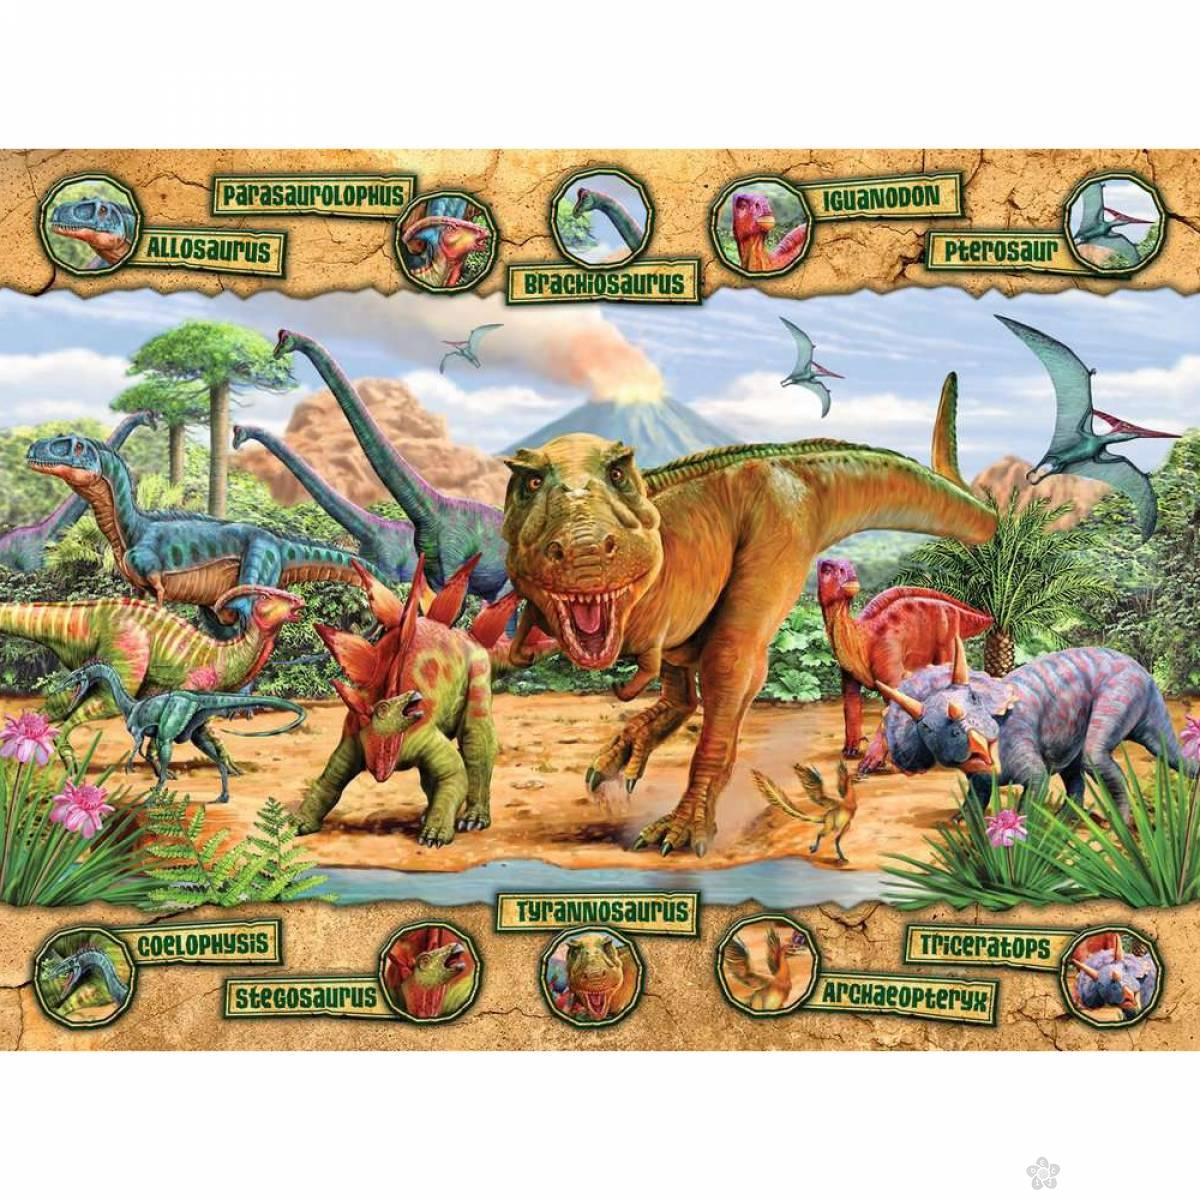 Ravensburger puzzle Dinosaurusi sa imenima RA10609 